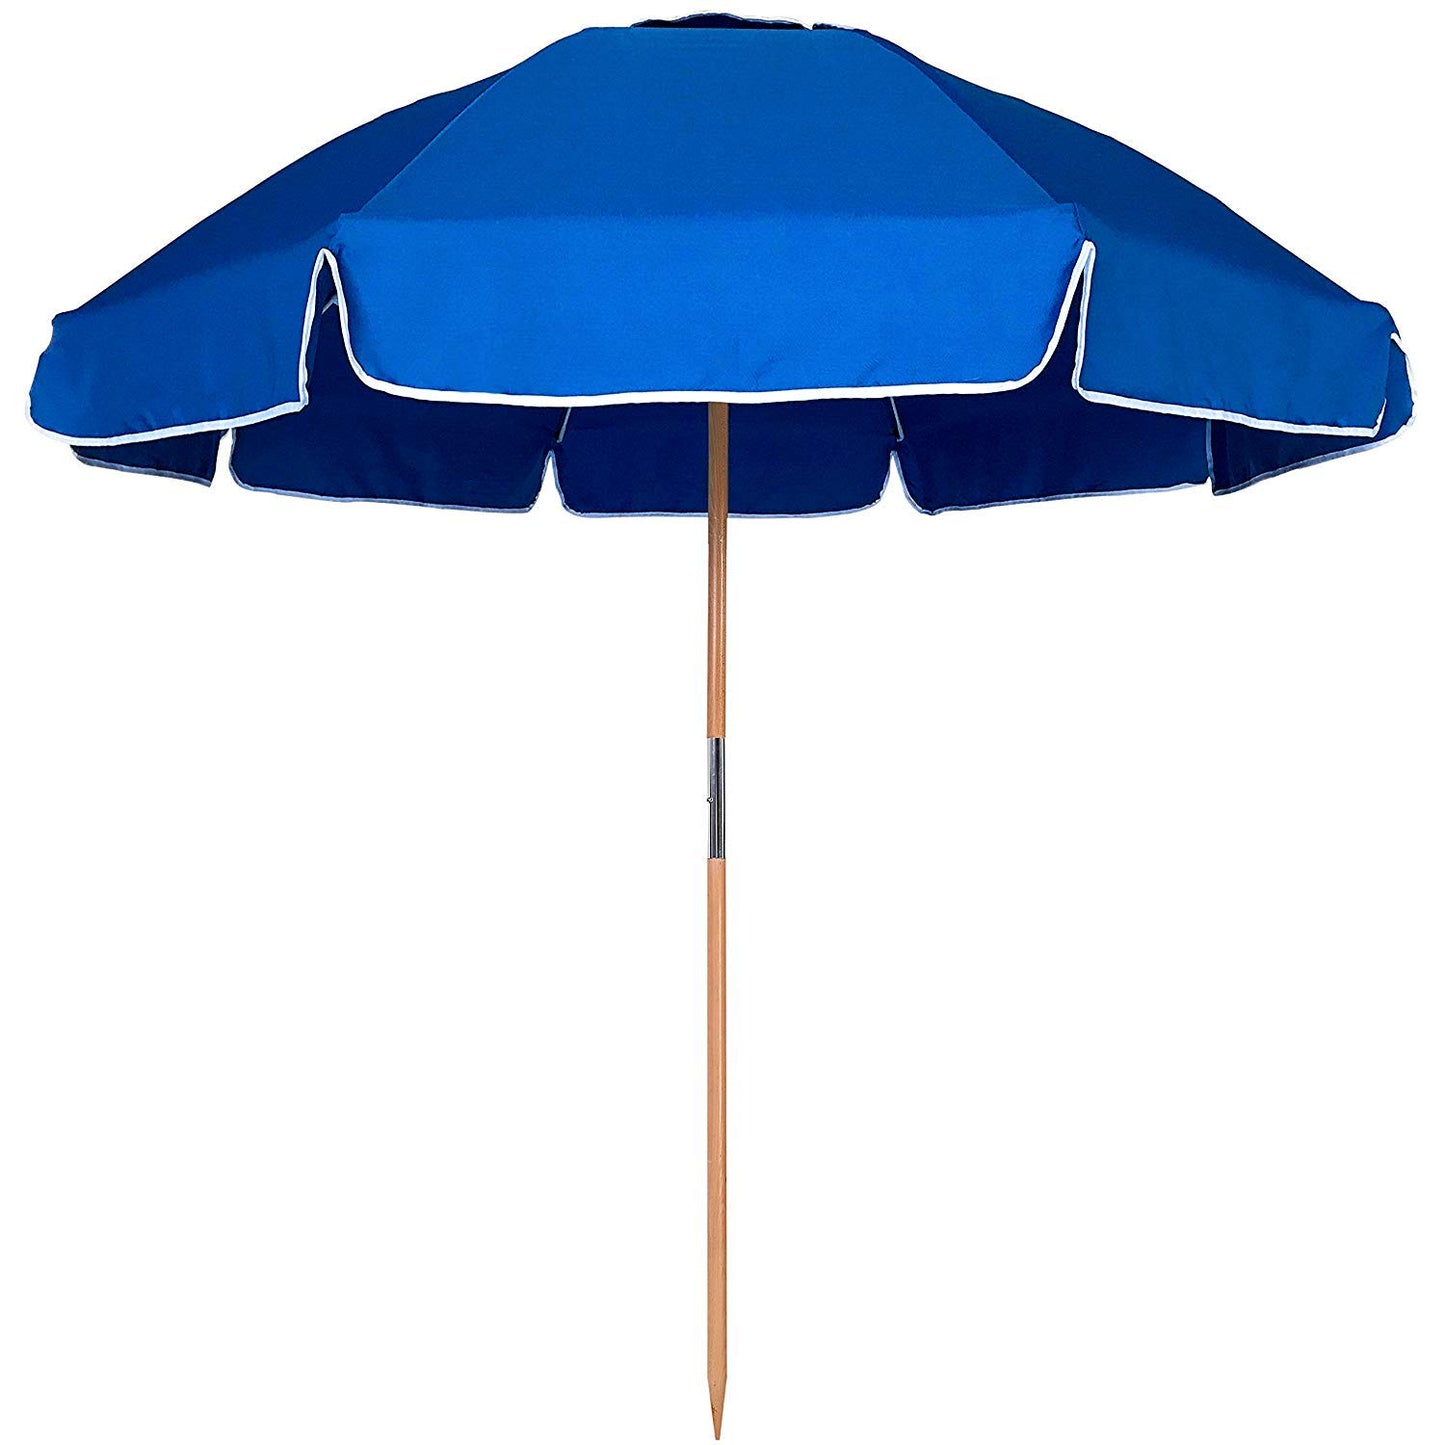 AMMSUN 7.5ft Heavy Duty HIGH Wind Beach Umbrella Commercial Grade Patio Beach Umbrella with Air Vent Ash Wood Pole & Carry Bag Upf 50+ Protection for Patio Garden Beach Pool Backyard Blue